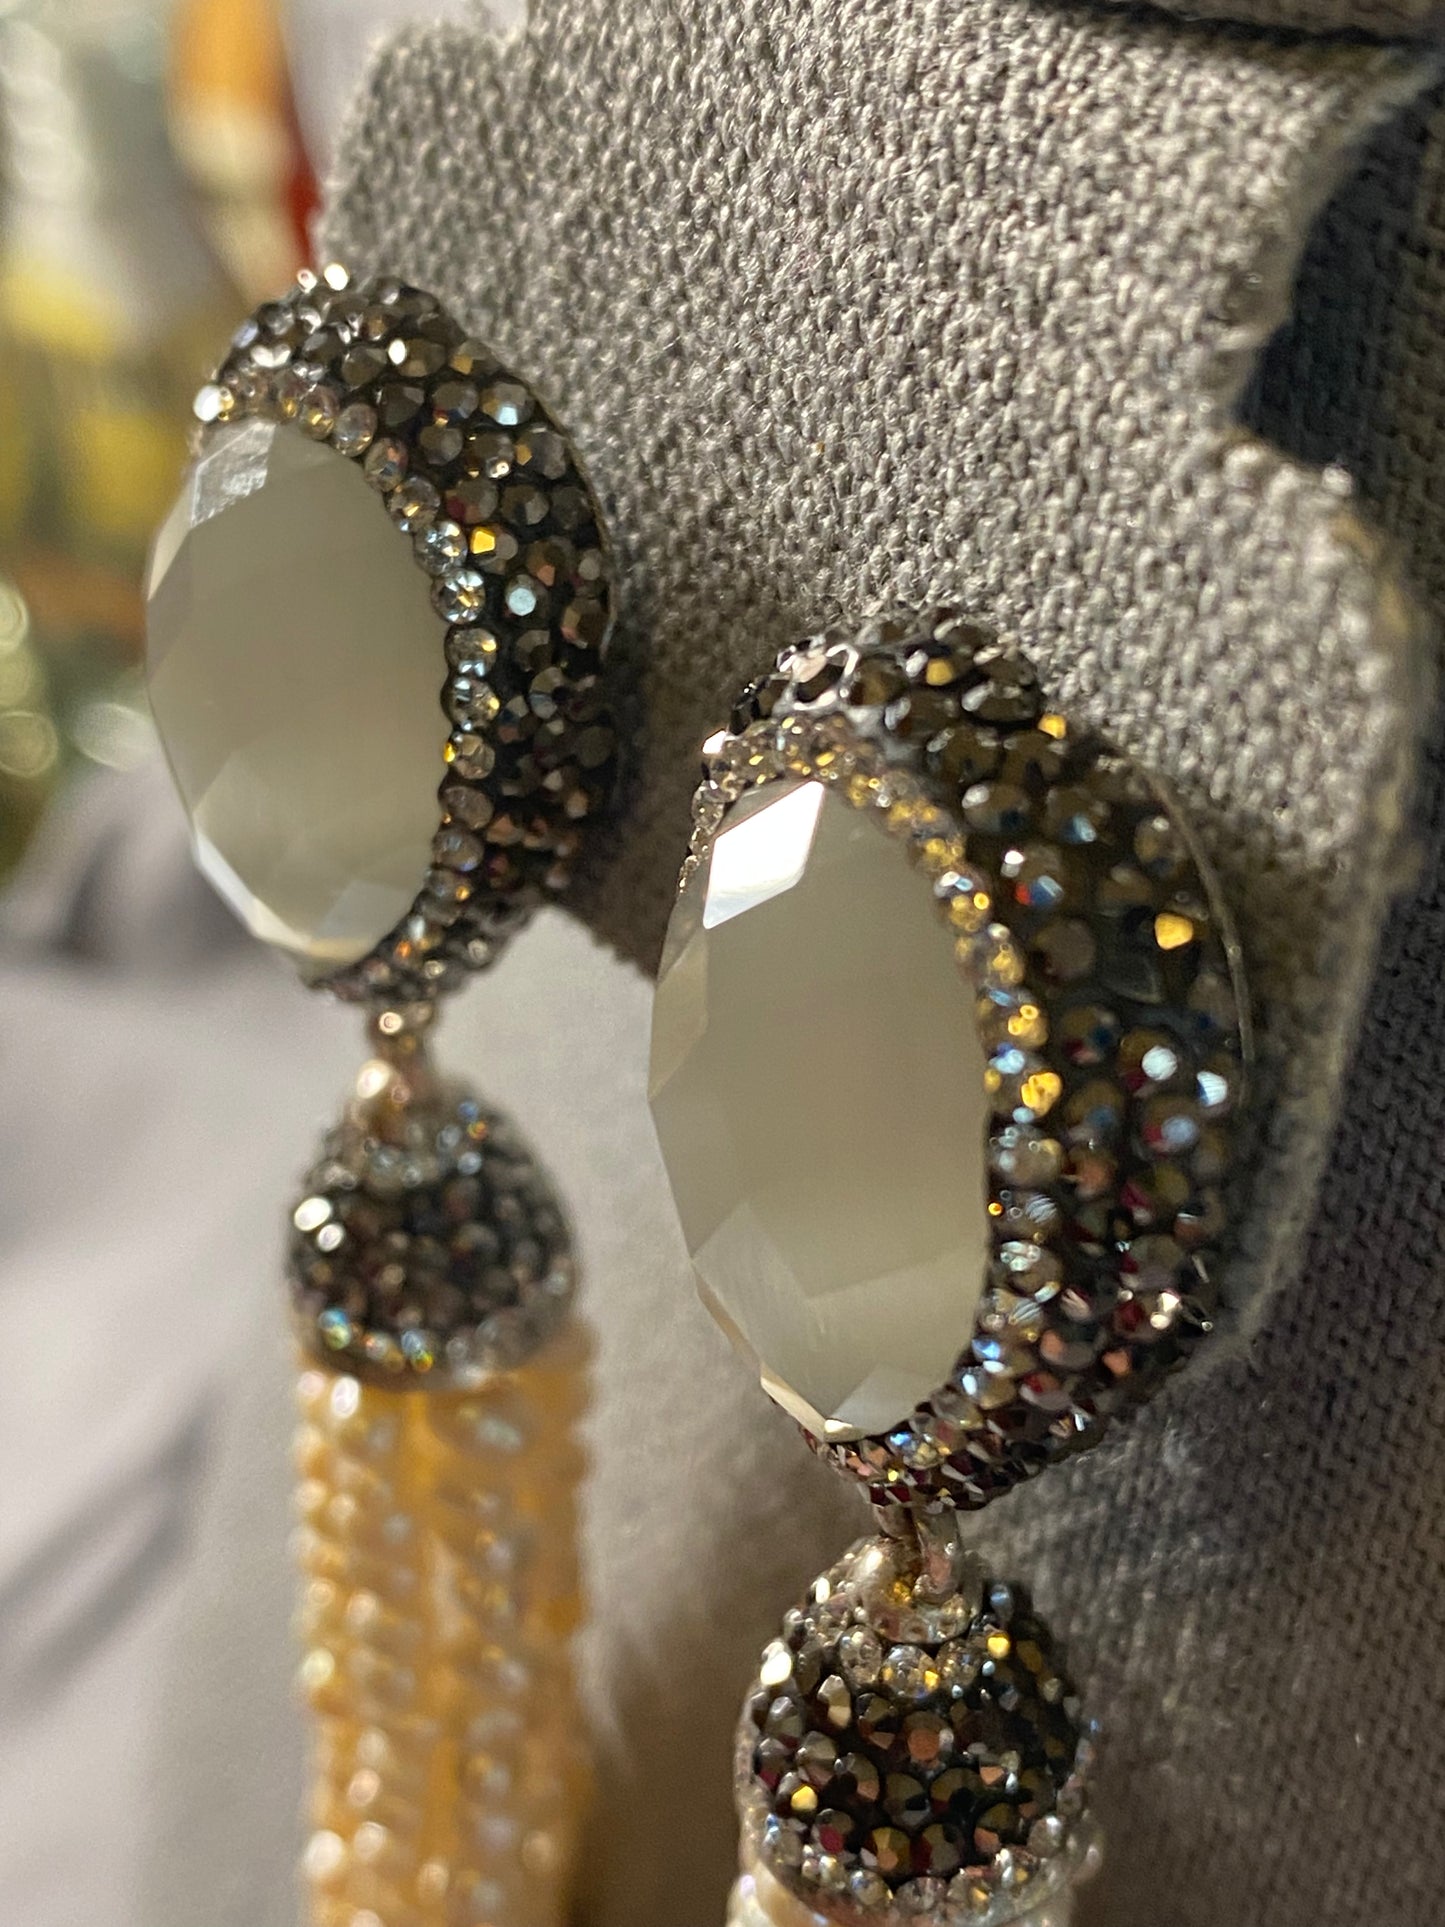 New Jewelry: Dangly Pearl Crystal Earrings